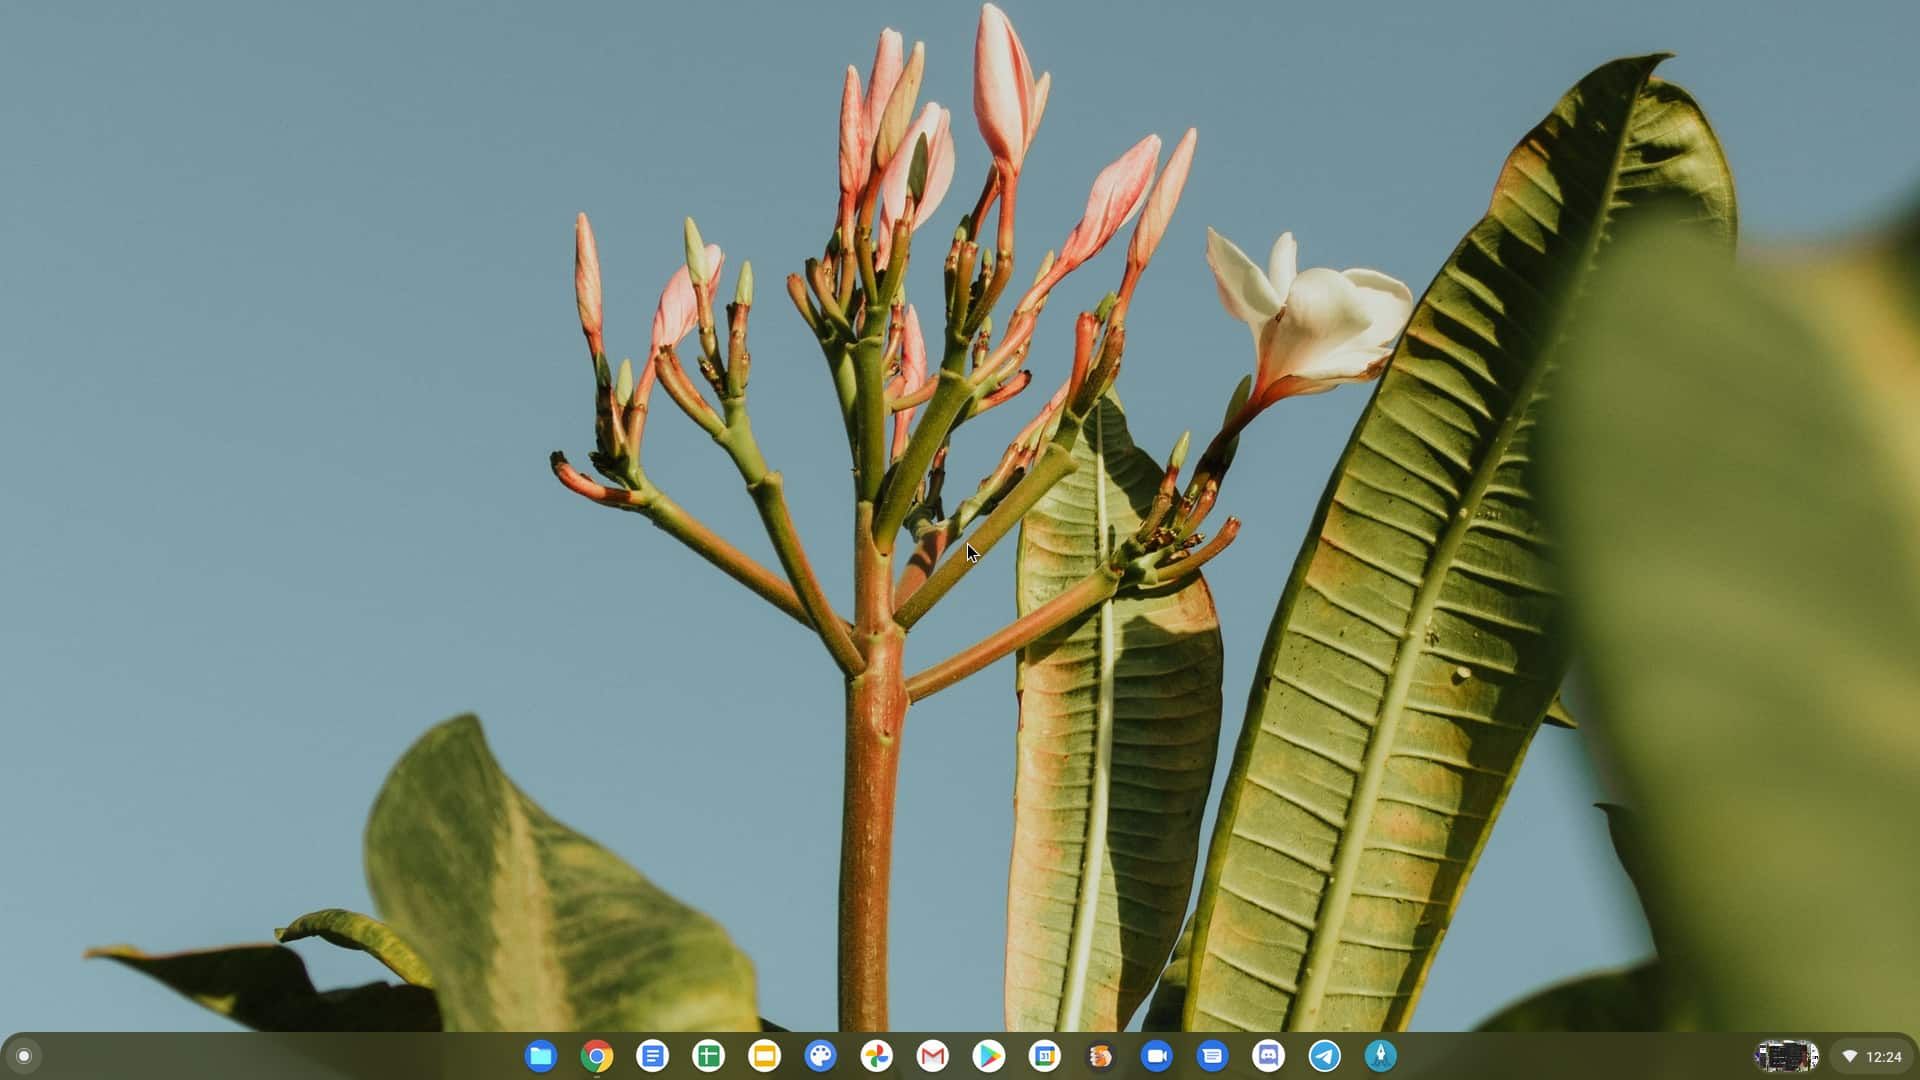 The ChromeOS desktop showing a plumeria wallpaper